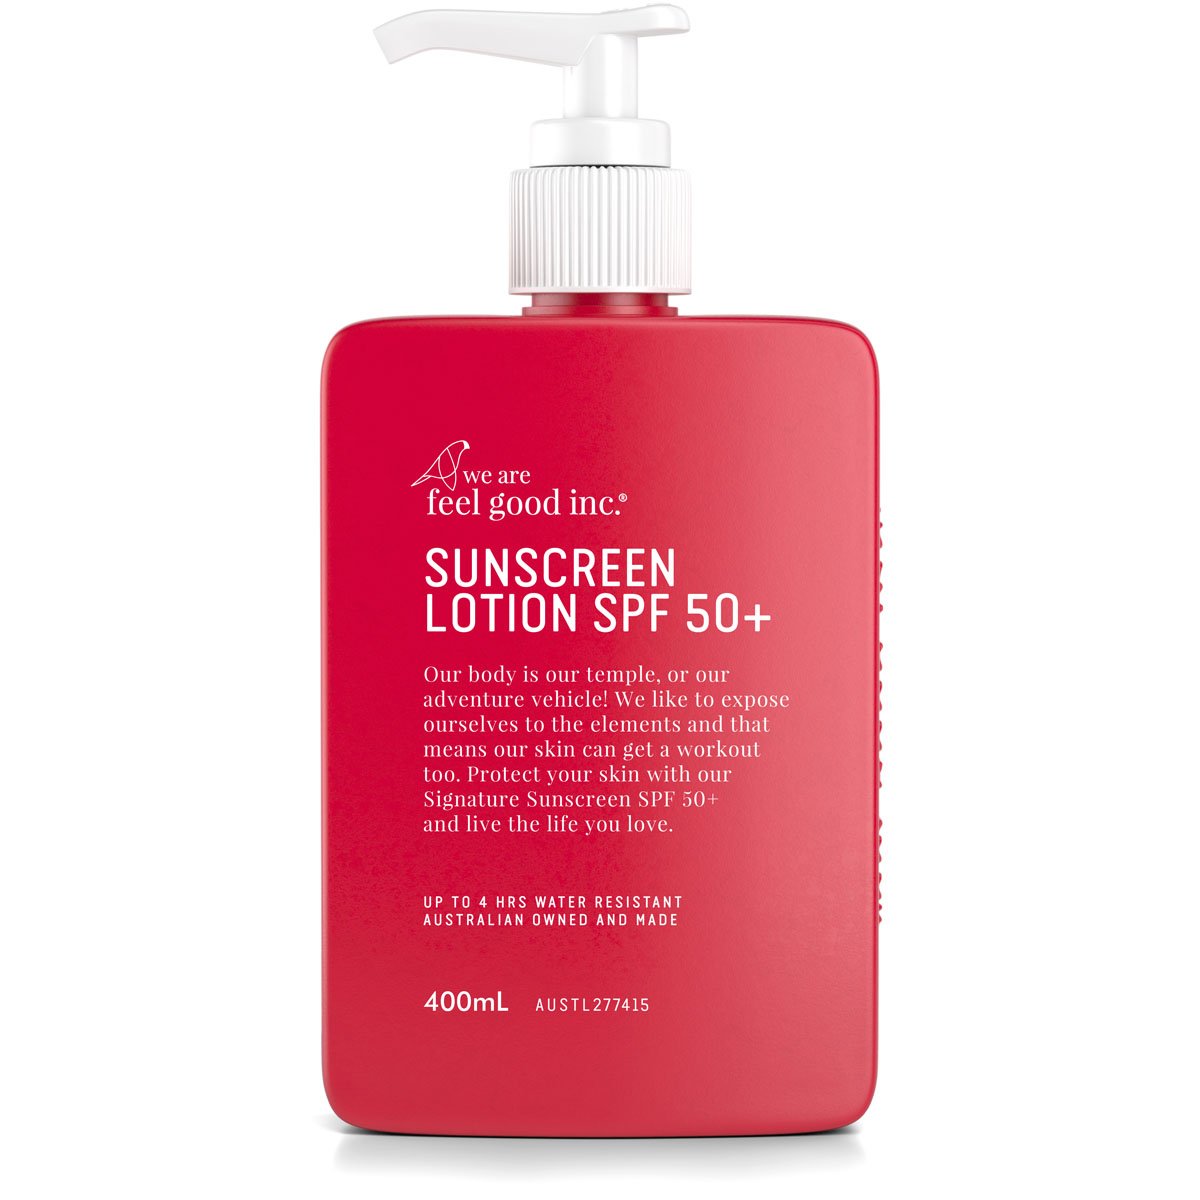 Signature Sunscreen SPF 50+ - We Are Feel Good Inc.